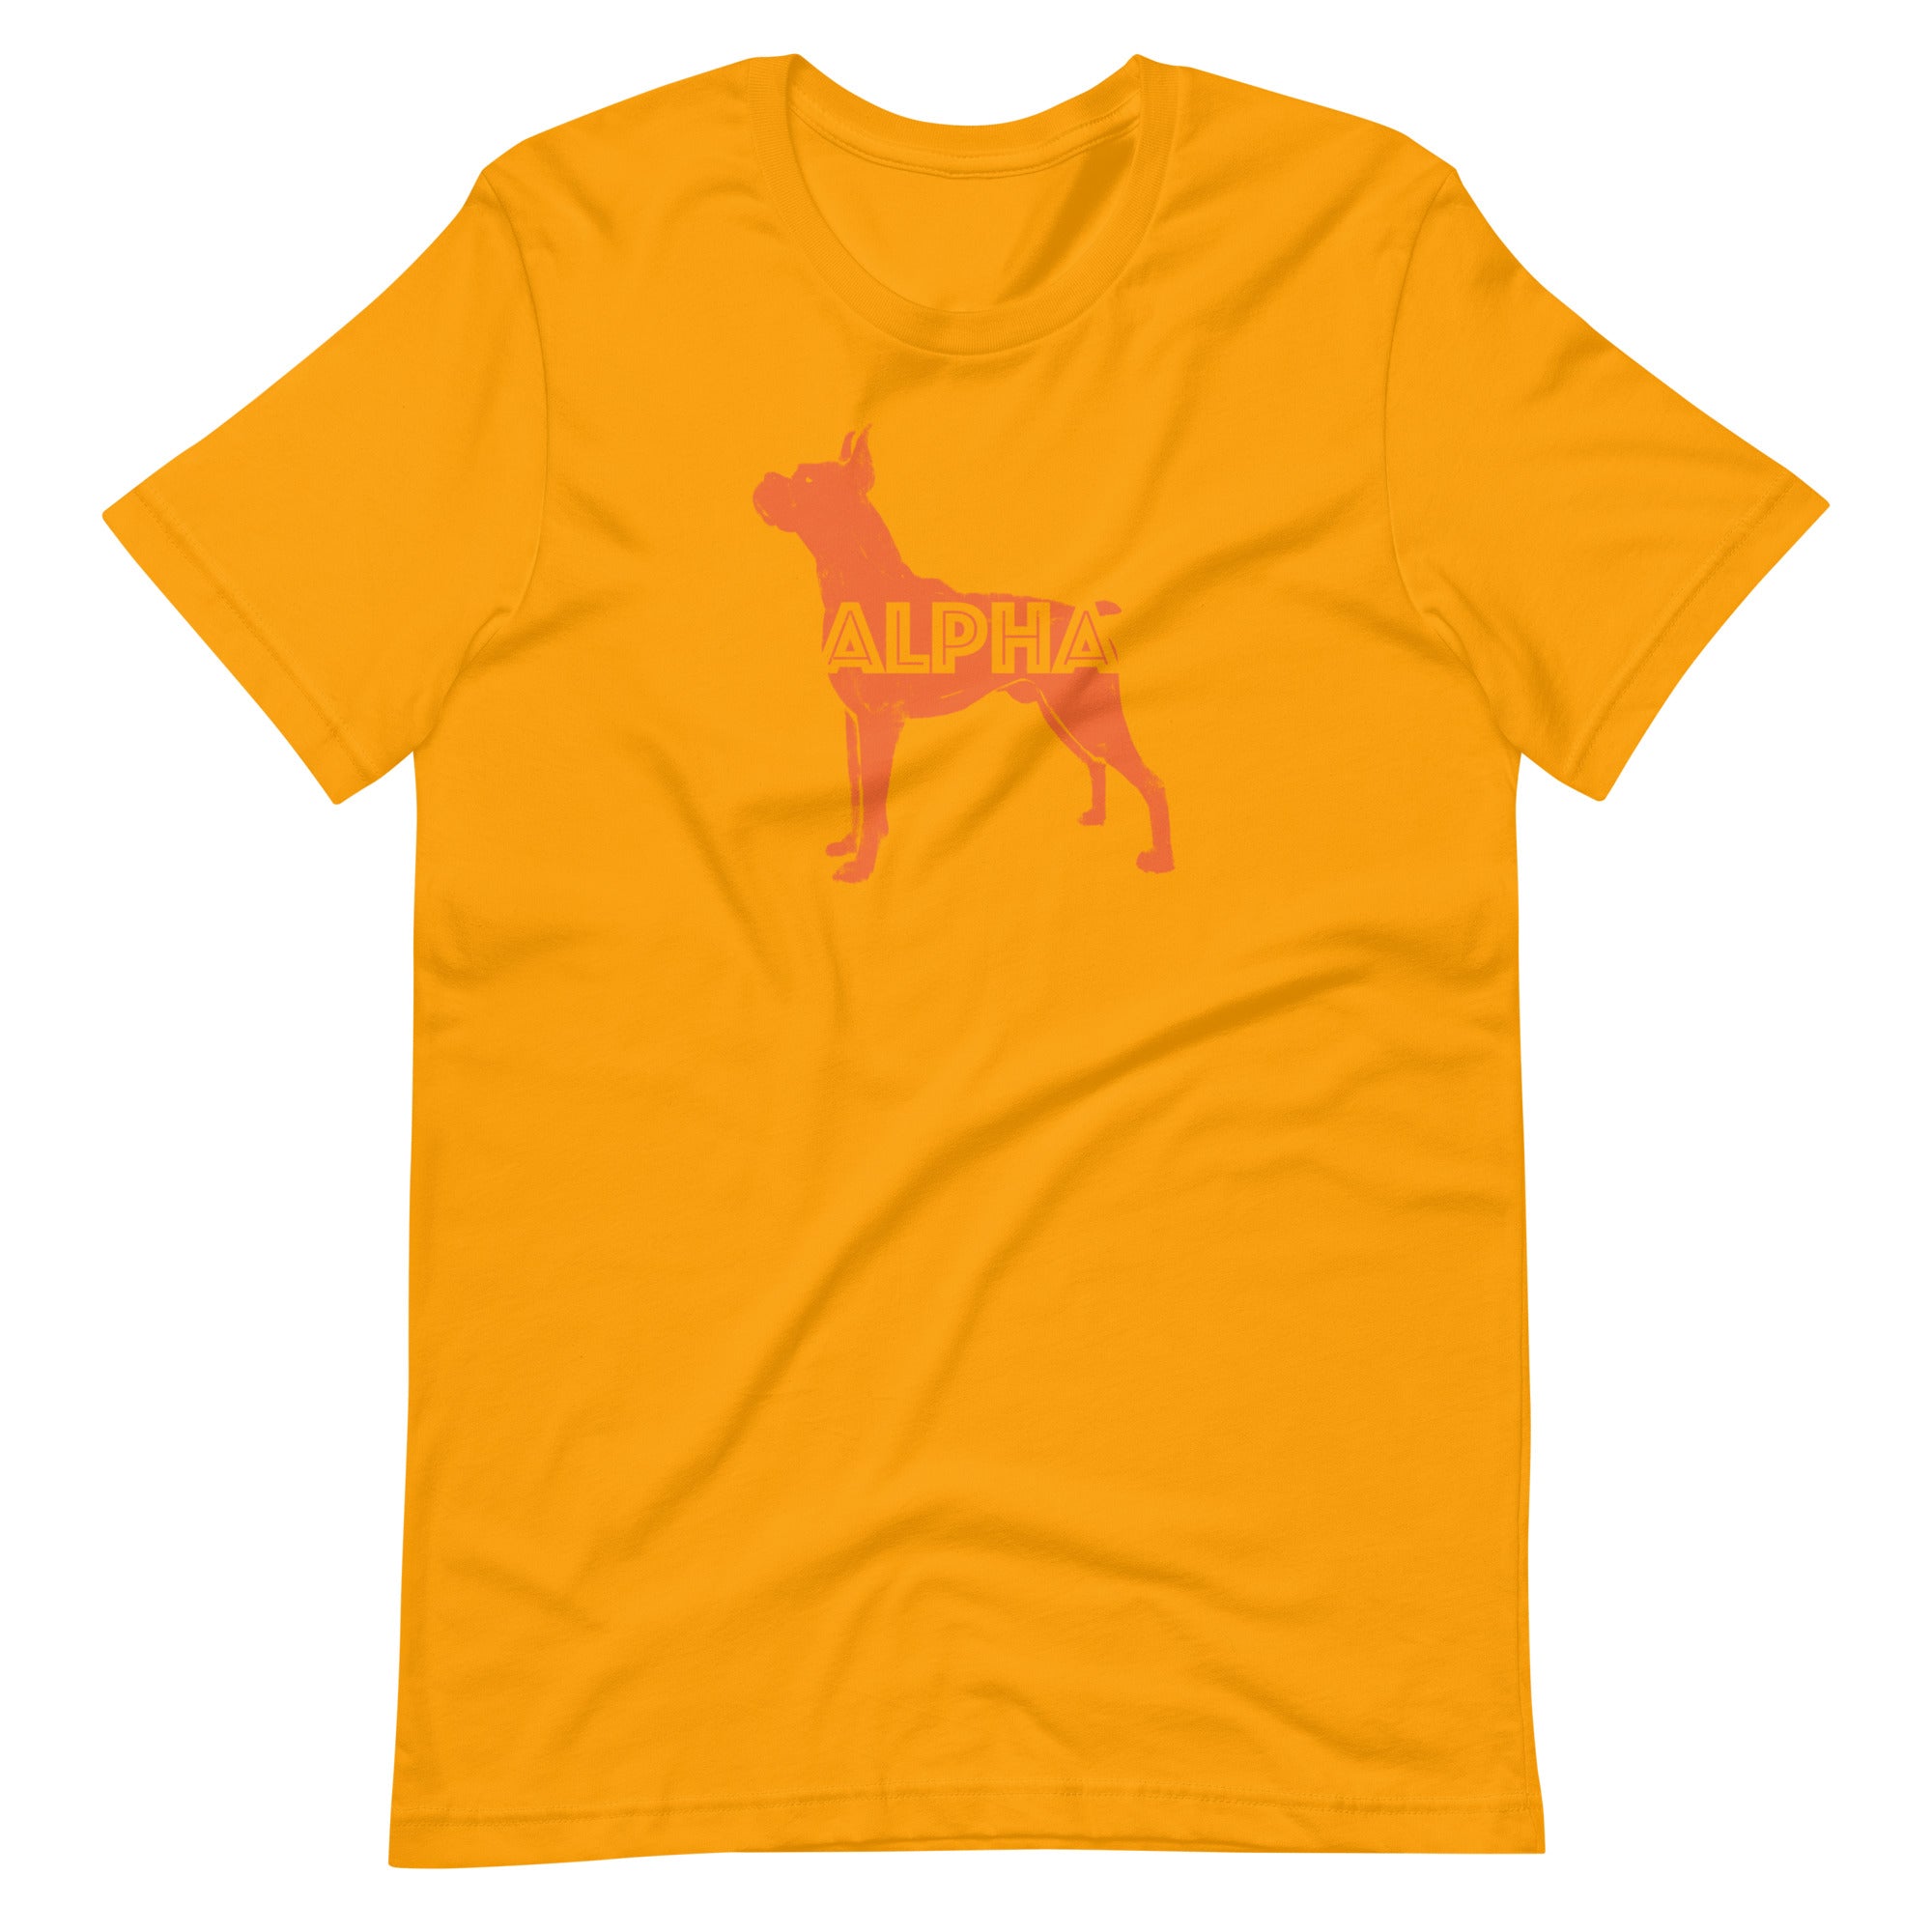 Alpha text Boxer Dog Design t-shirt in orange